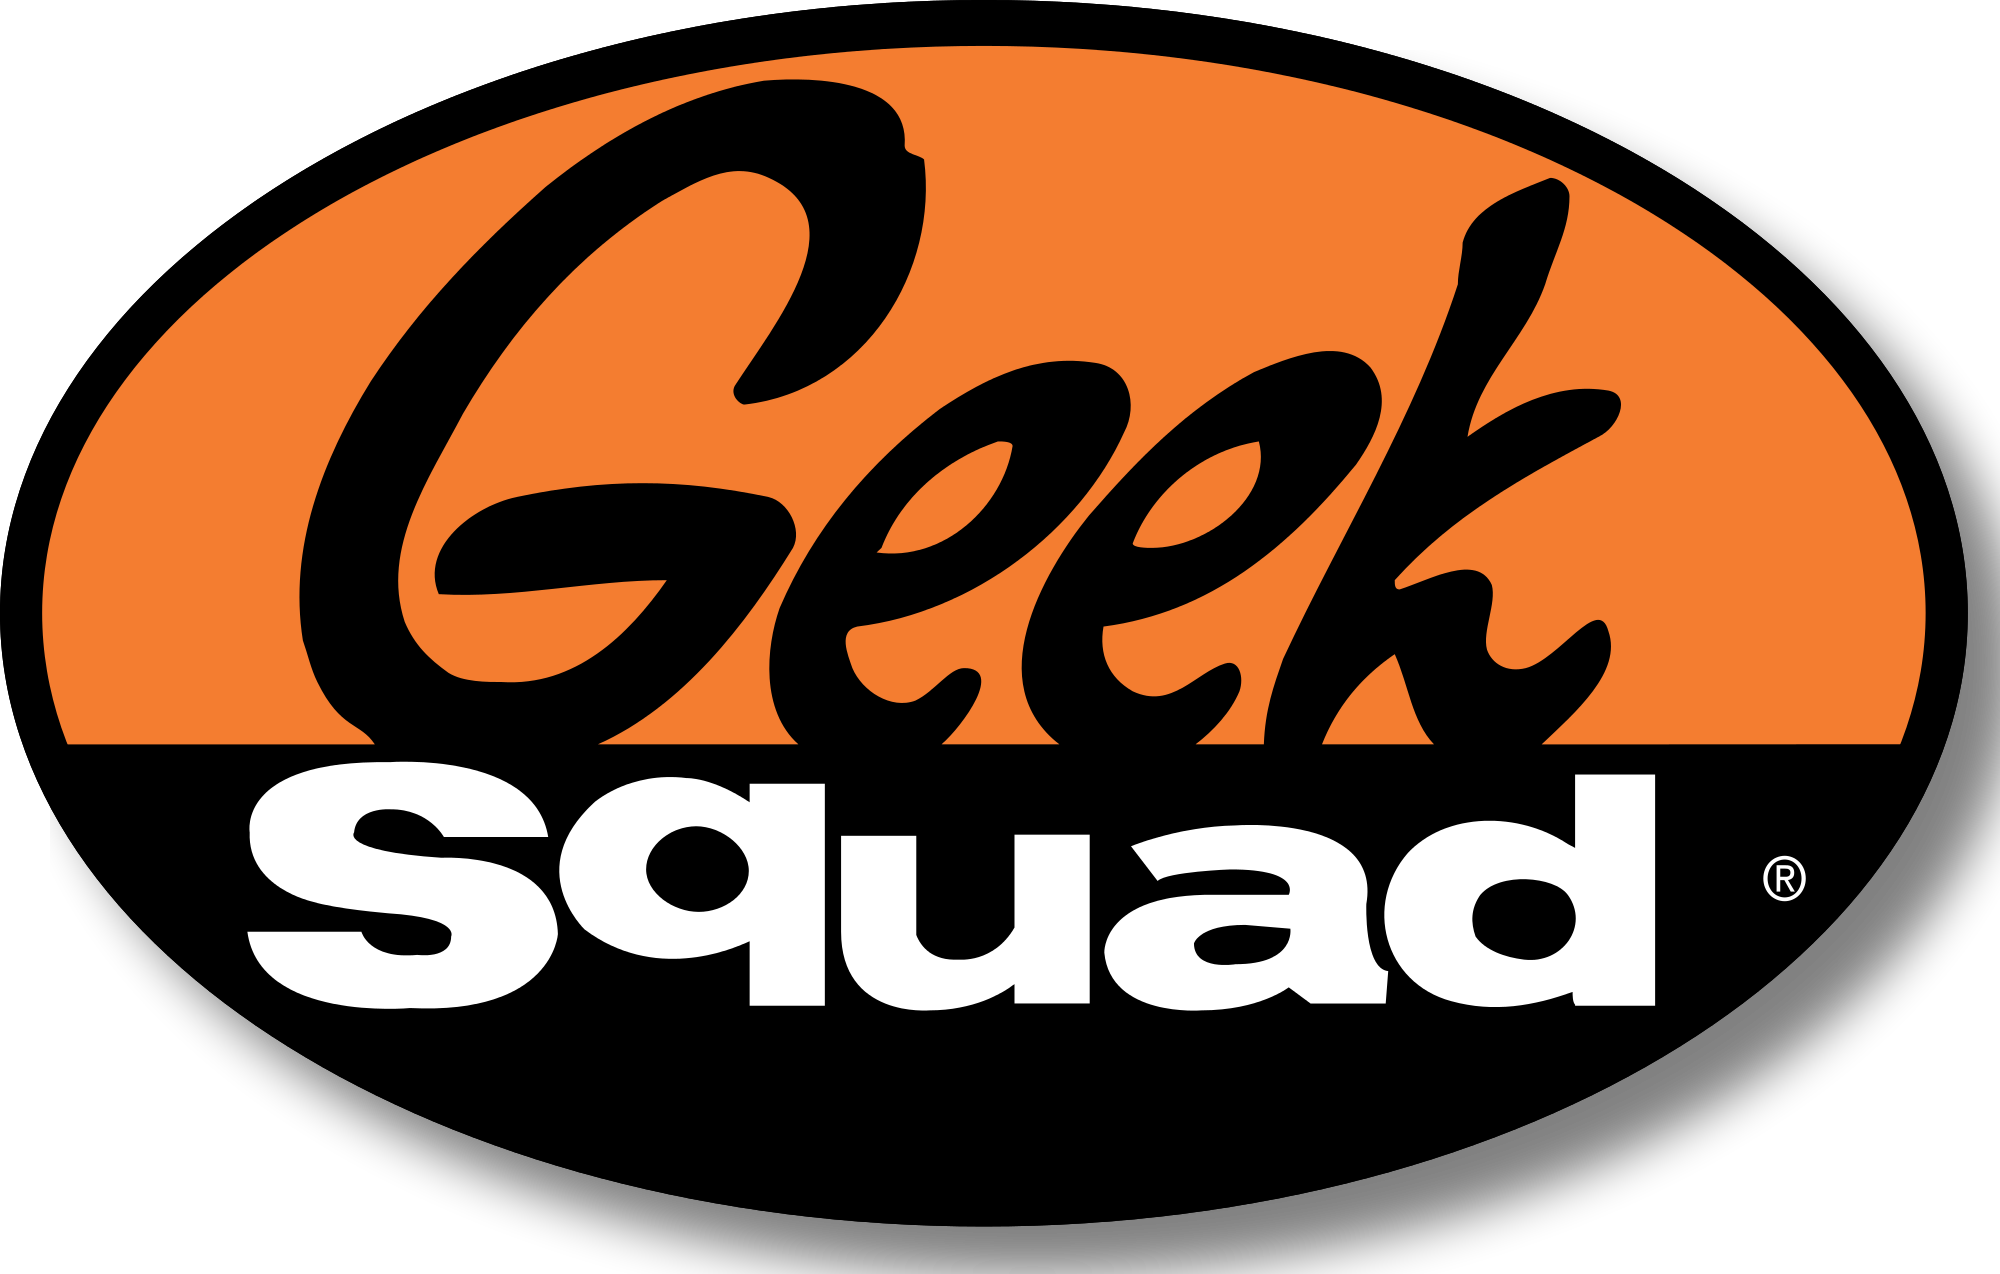 Open - Geek Squad (2000x1274)